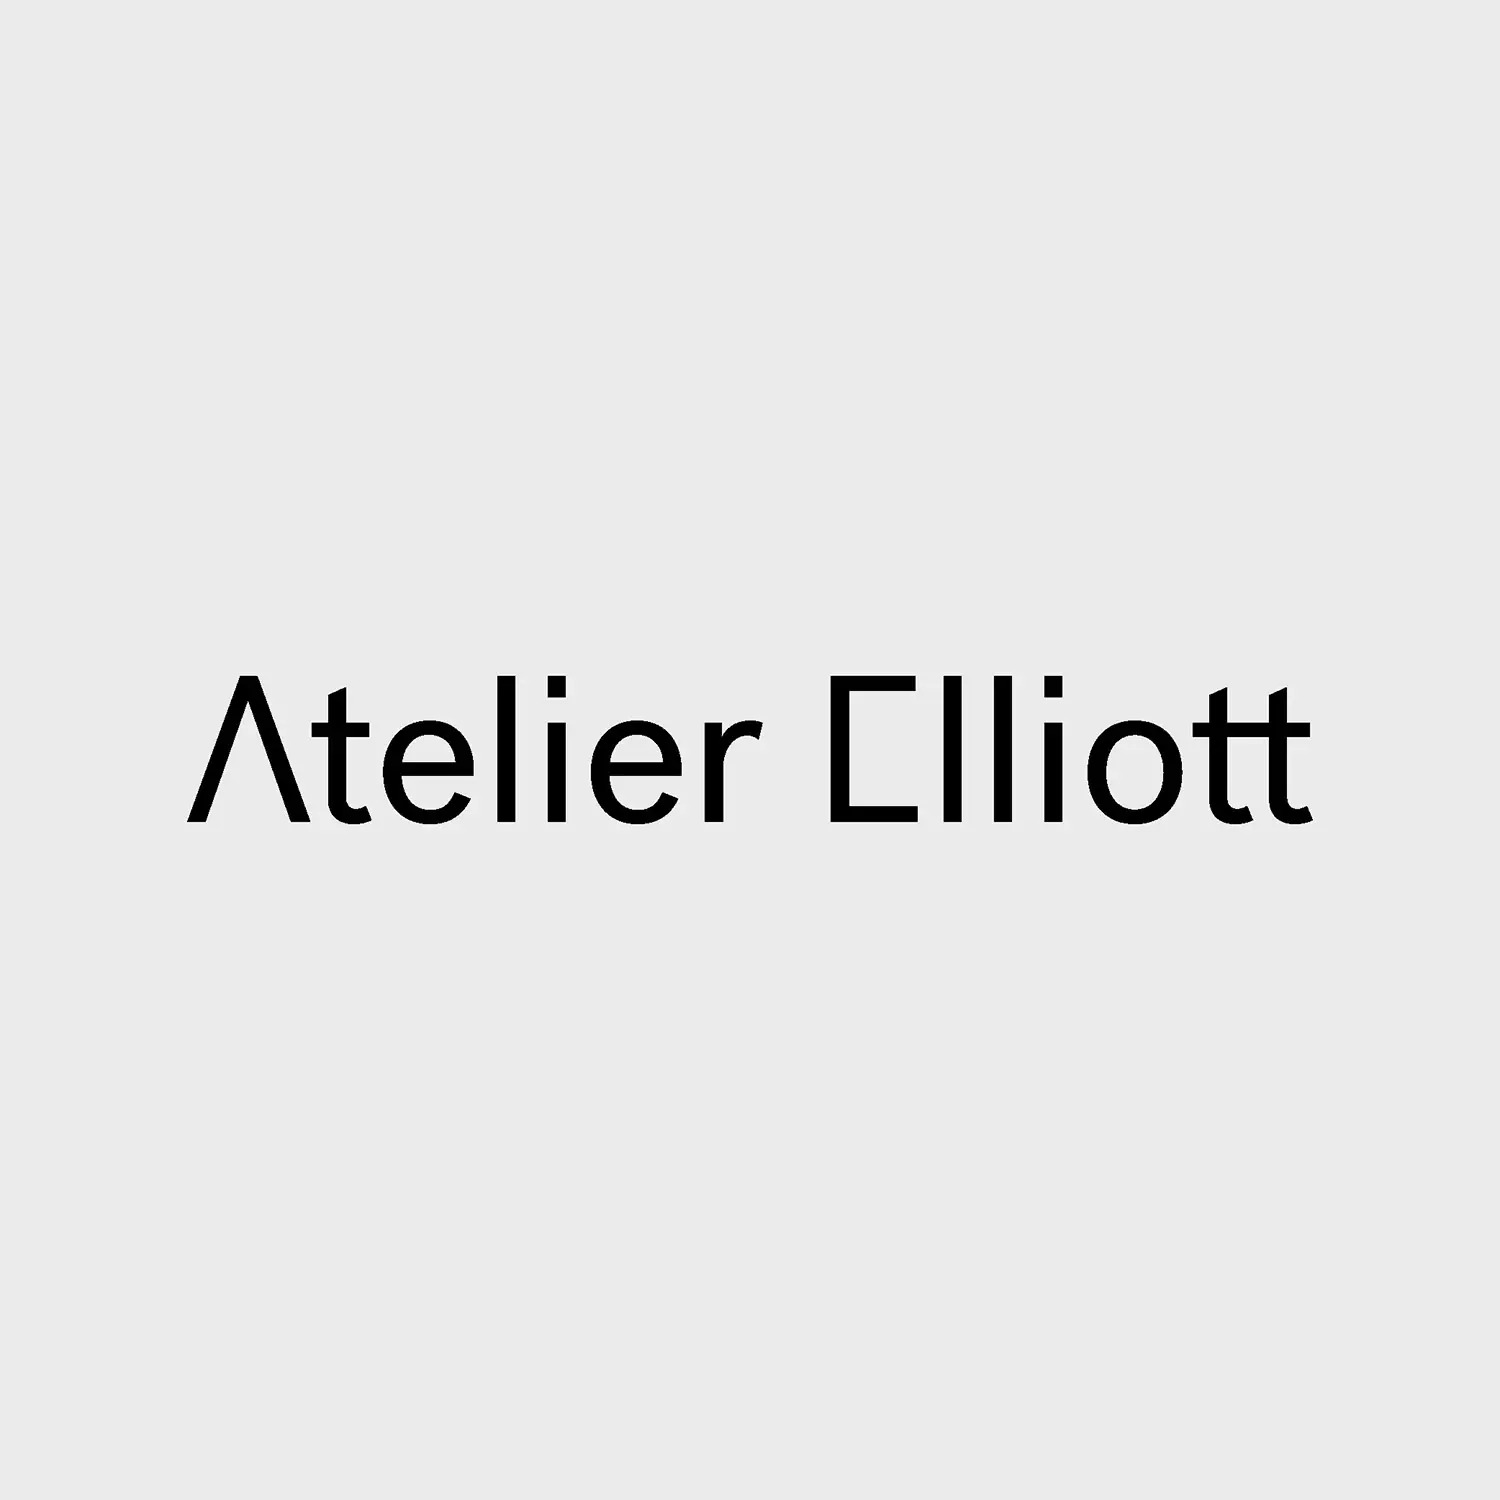 Atelier Elliott创意咨询公司品牌形象设计